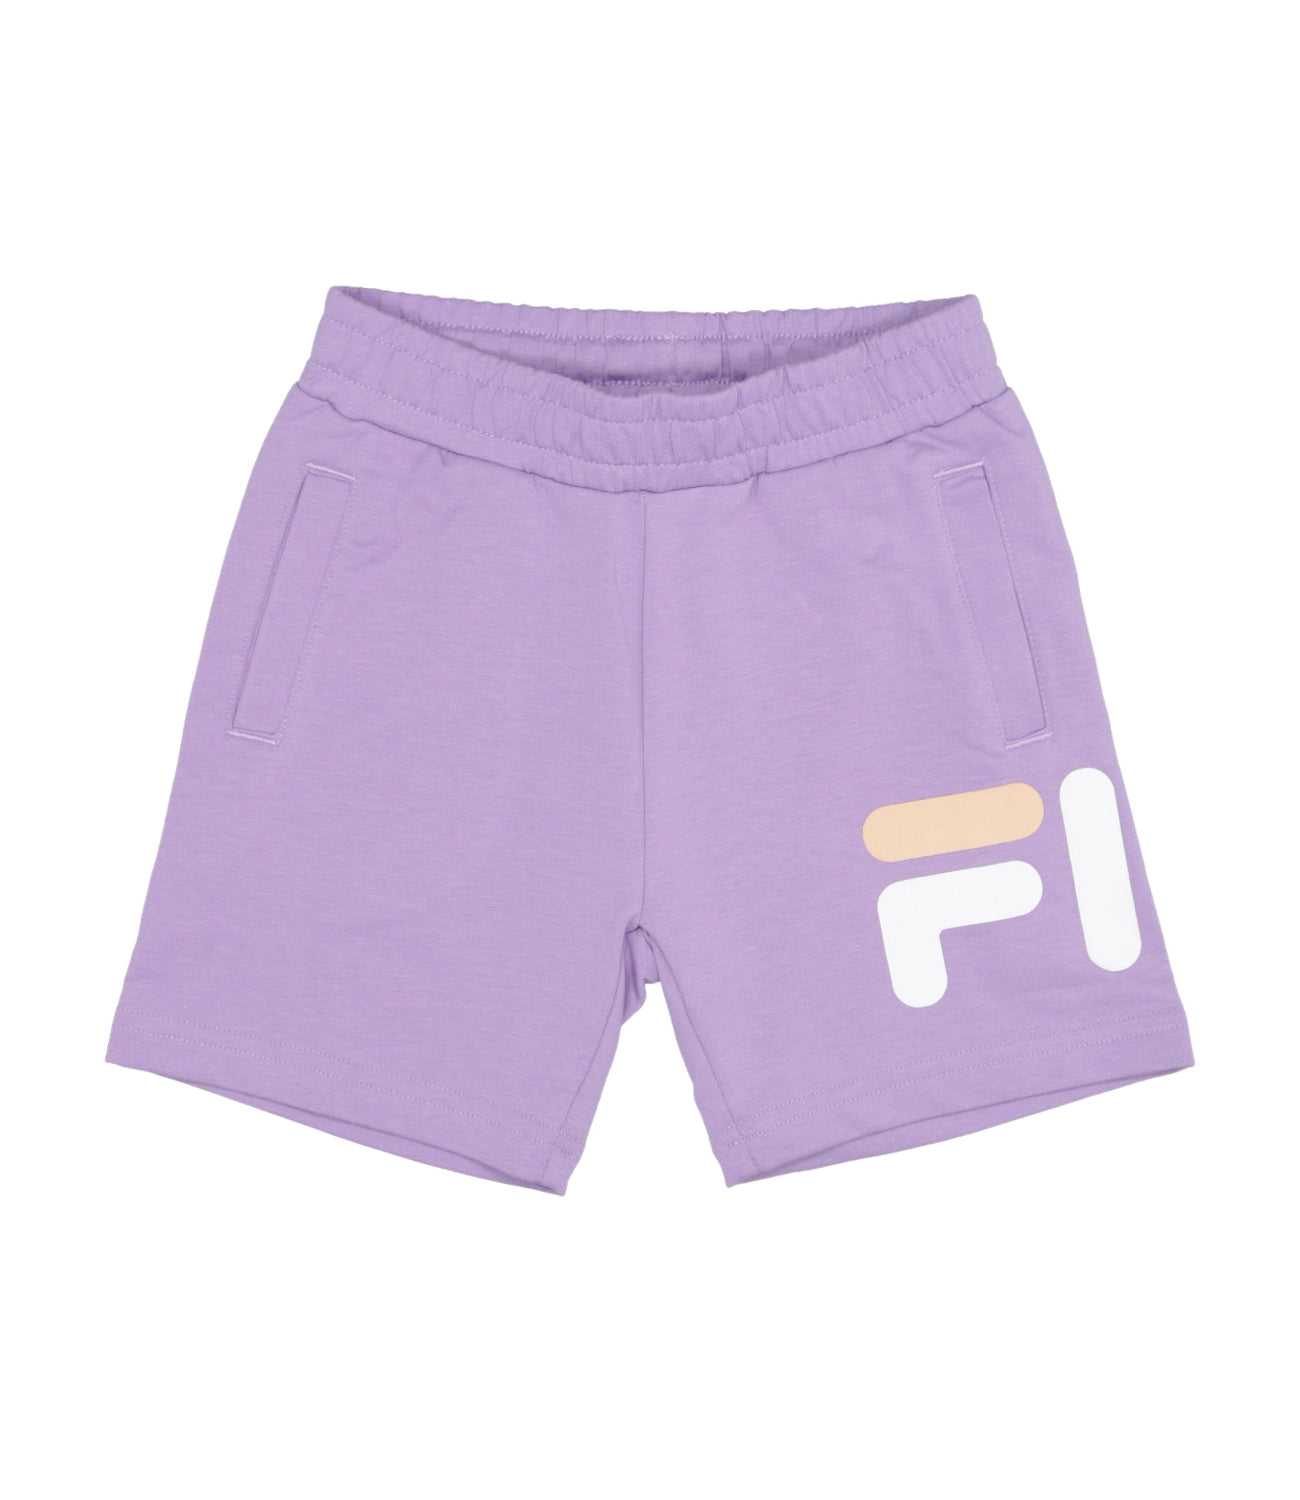 Fila Kids | Shorts Purple